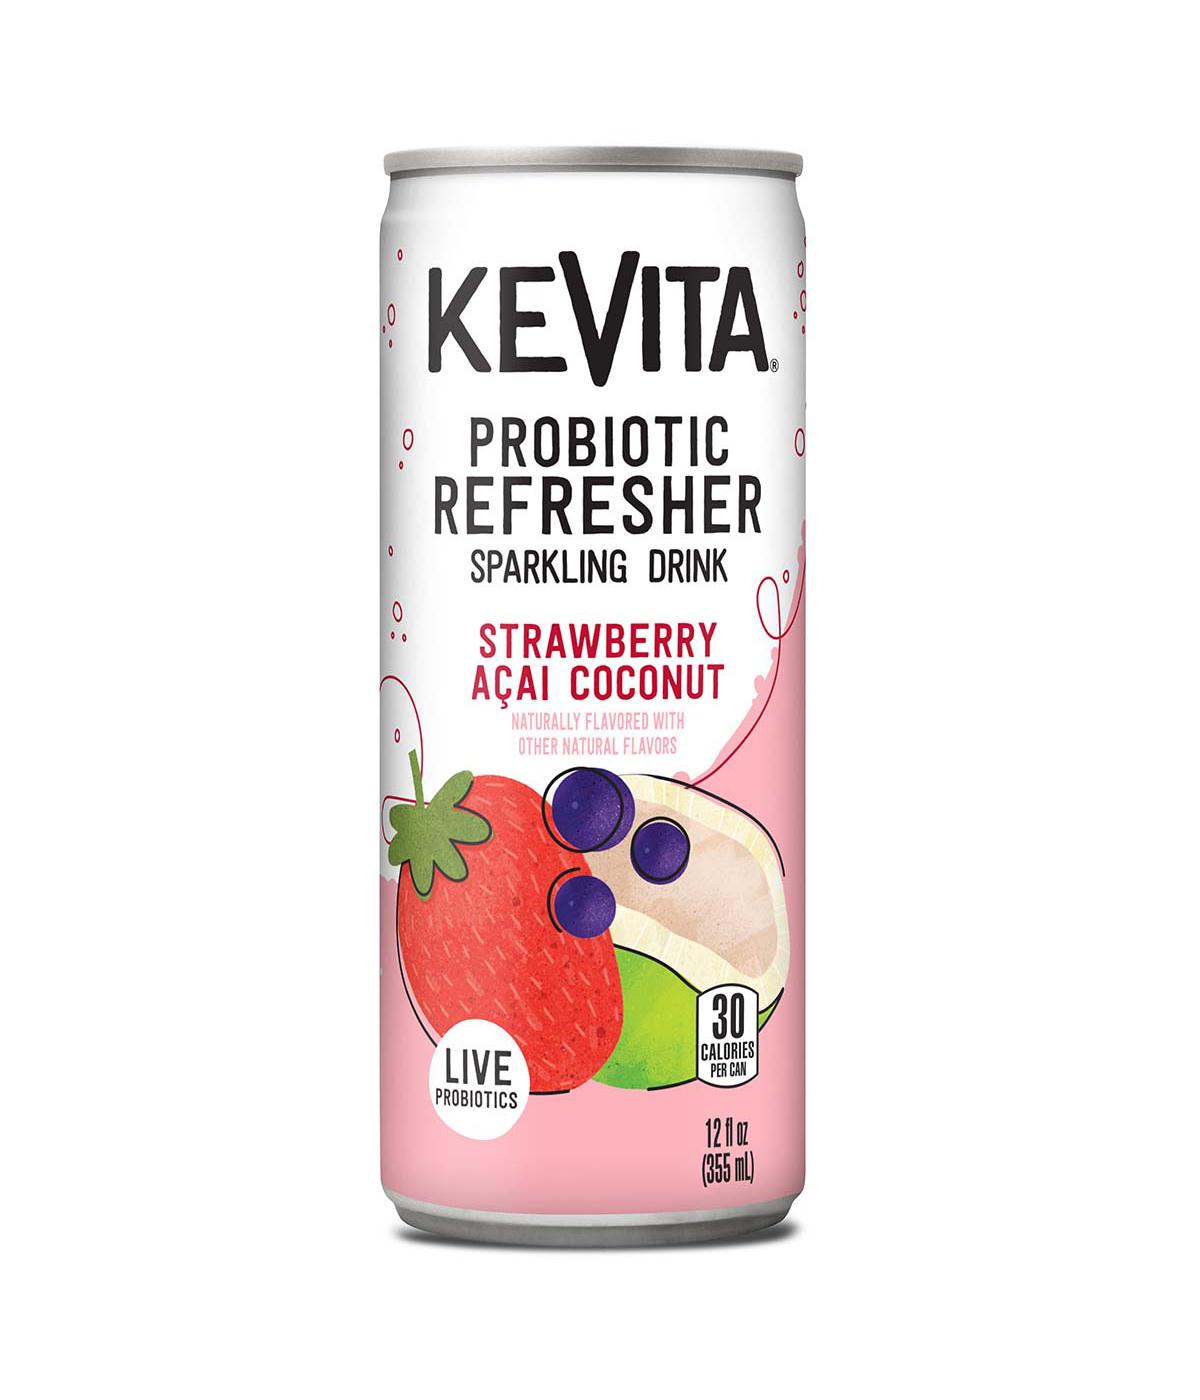 KeVita Strawberry Acai Coconut Probiotic Refresher Sparkling Drink; image 1 of 4